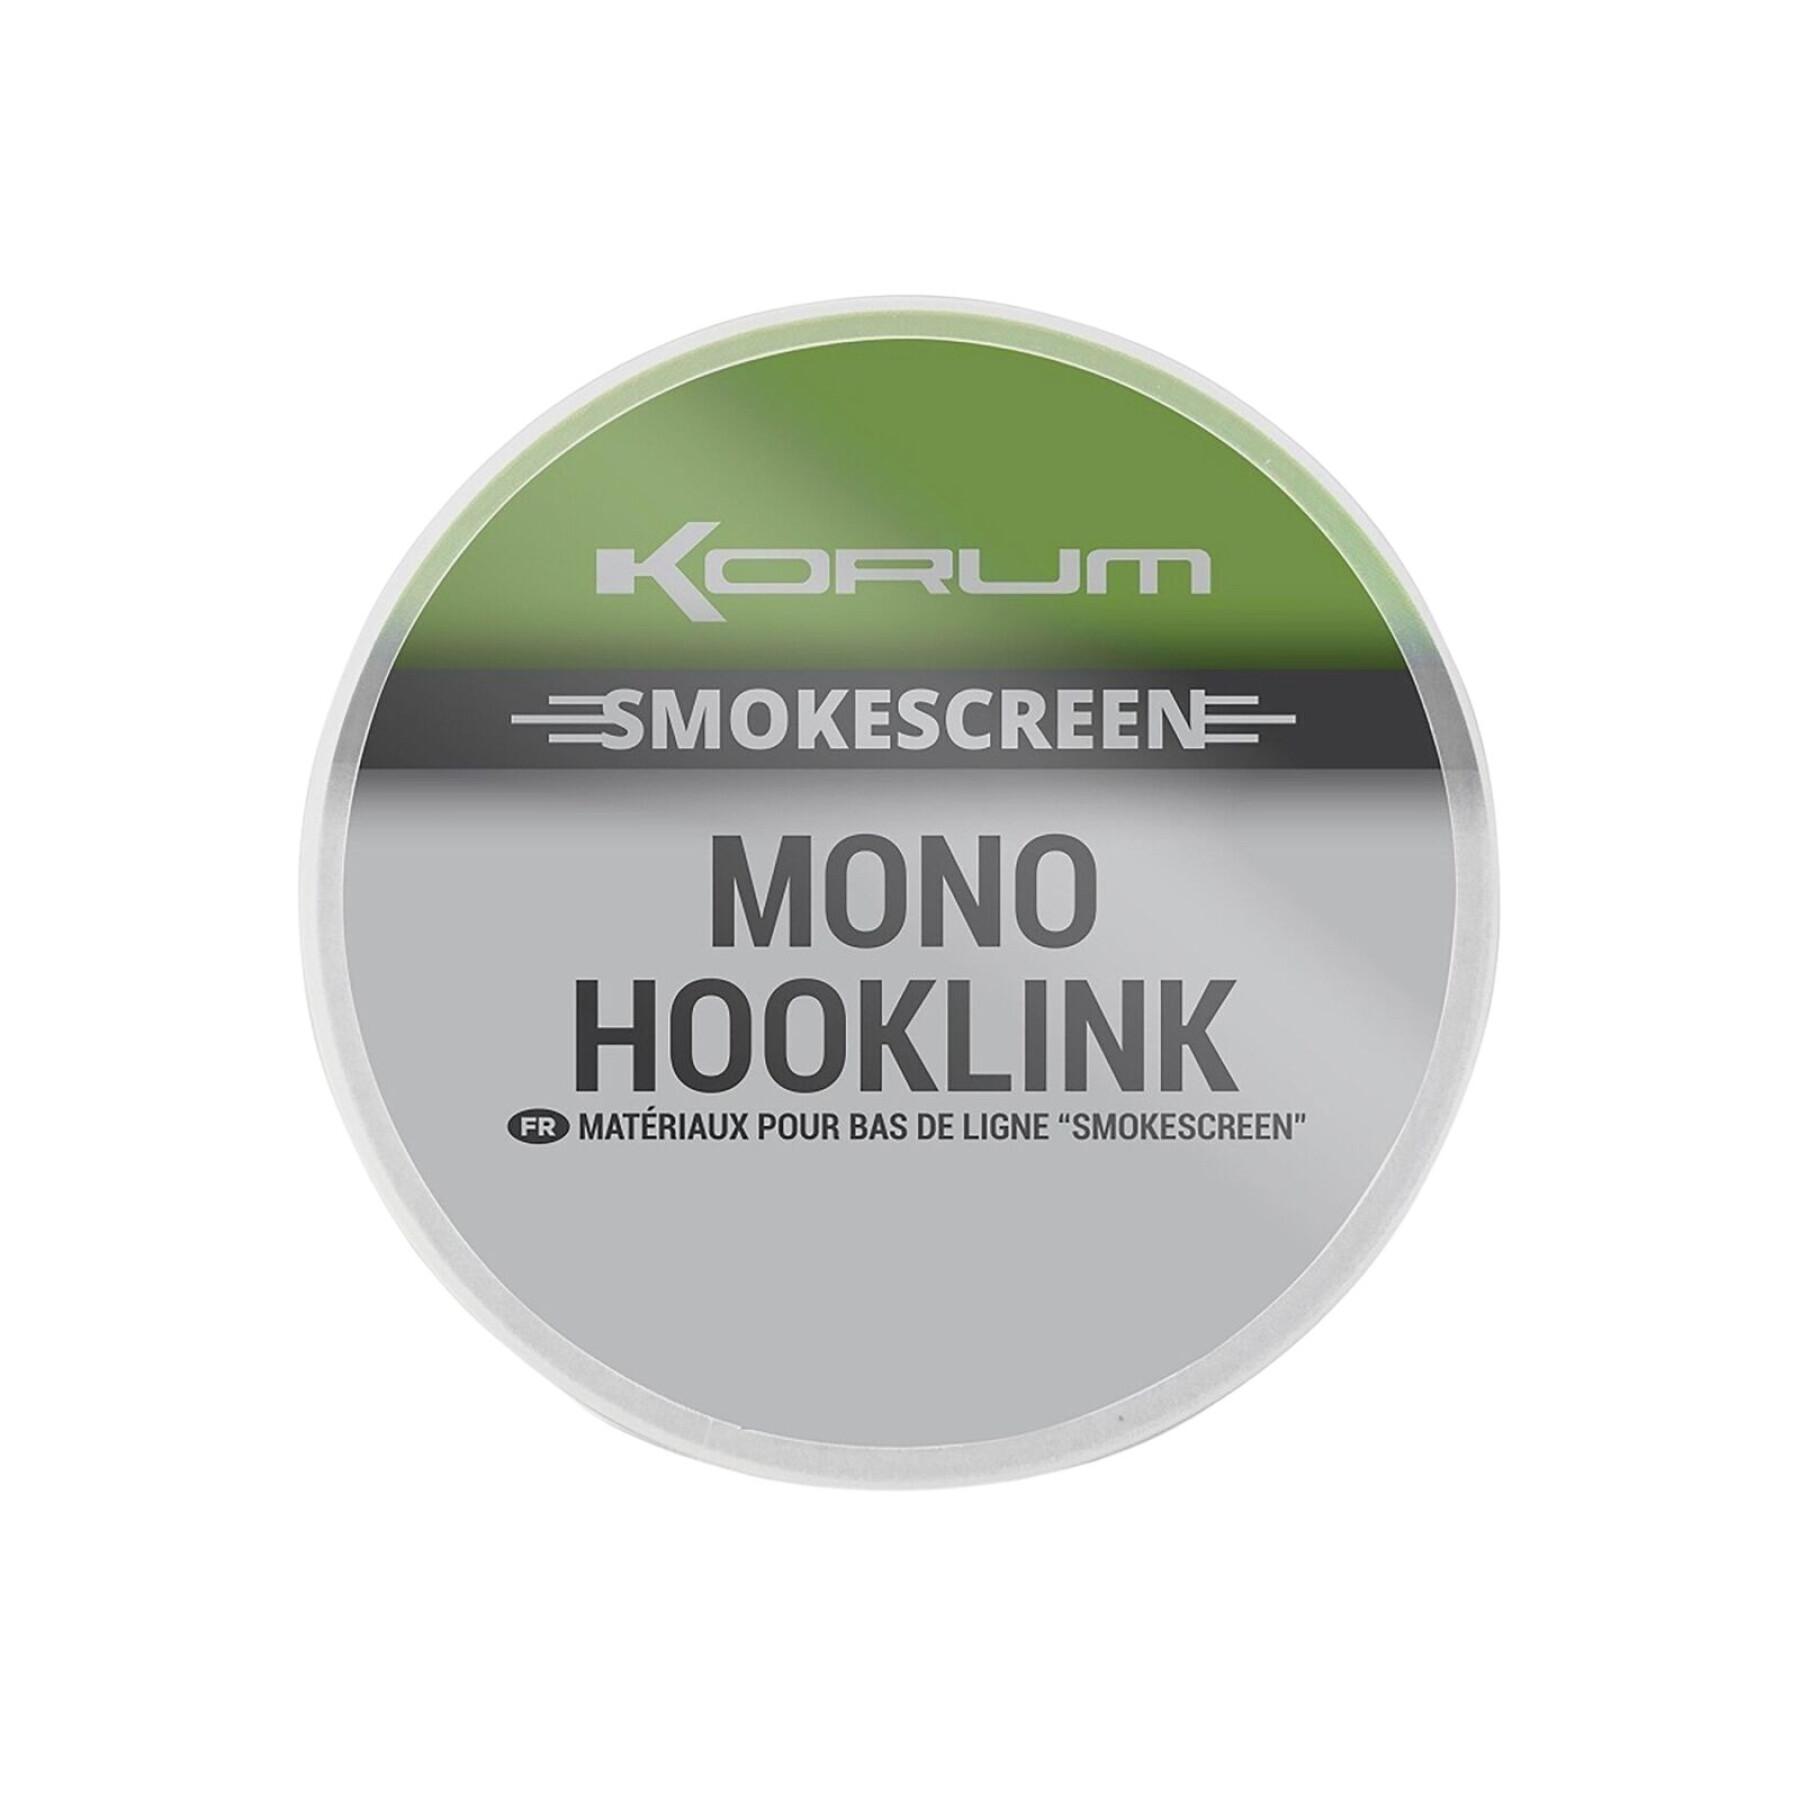 Cutting leader Korum Smokescreen Mono Hooklink